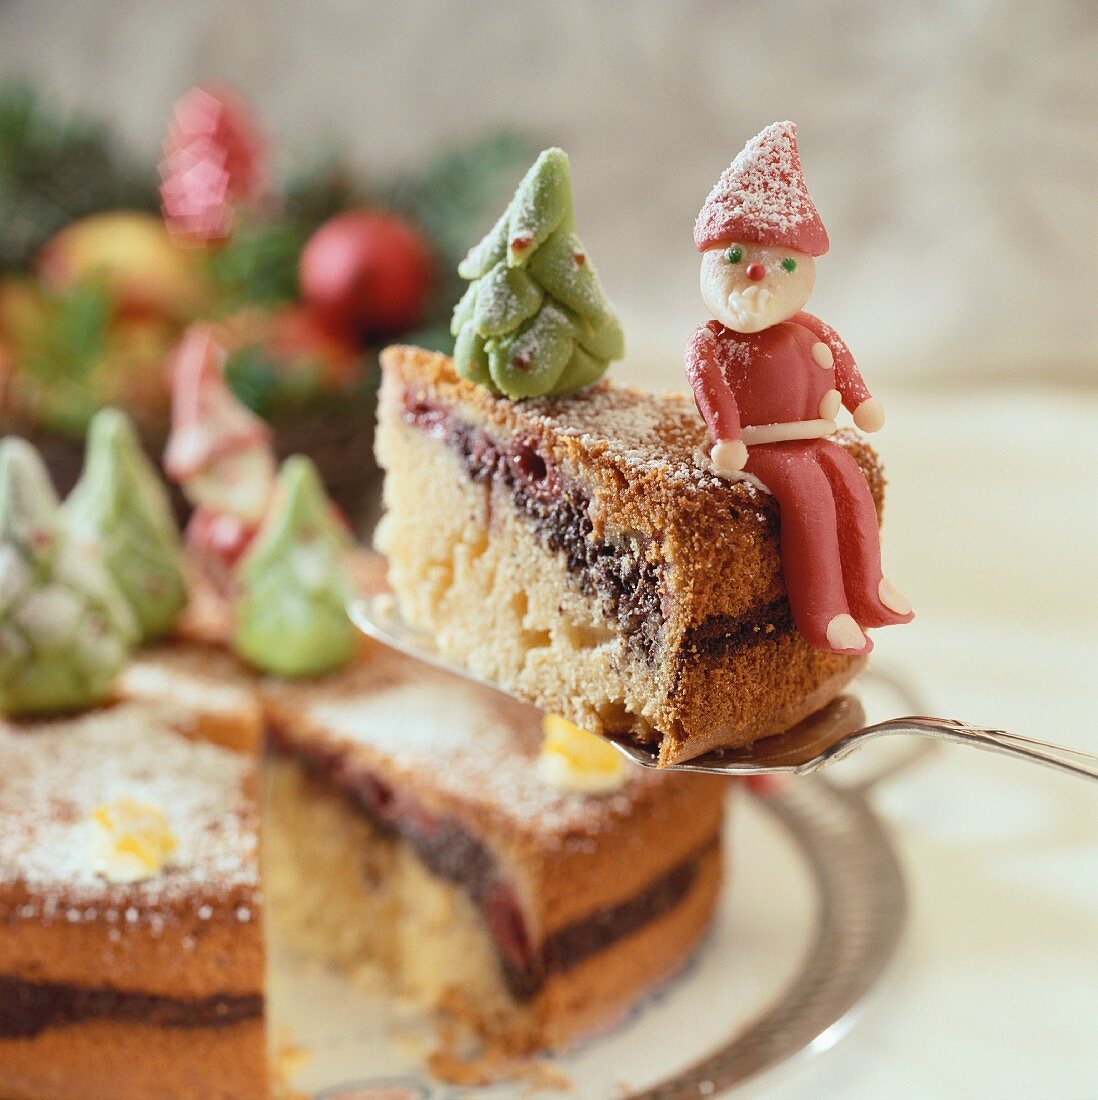 Carrot cake with marzipan figures for Christmas